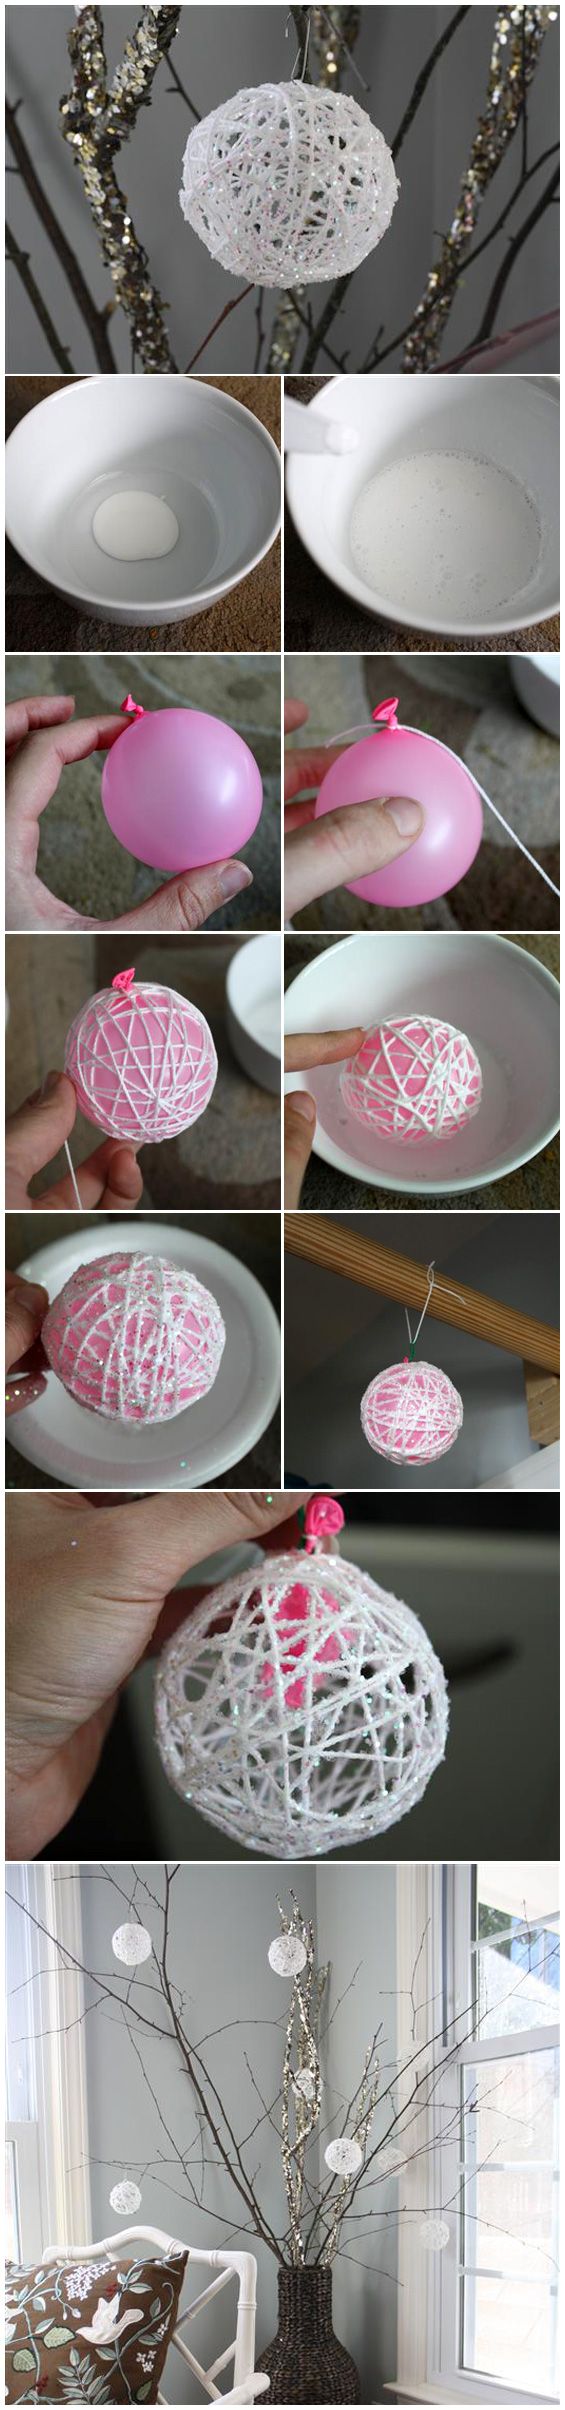 DIY ~~ making string ornaments